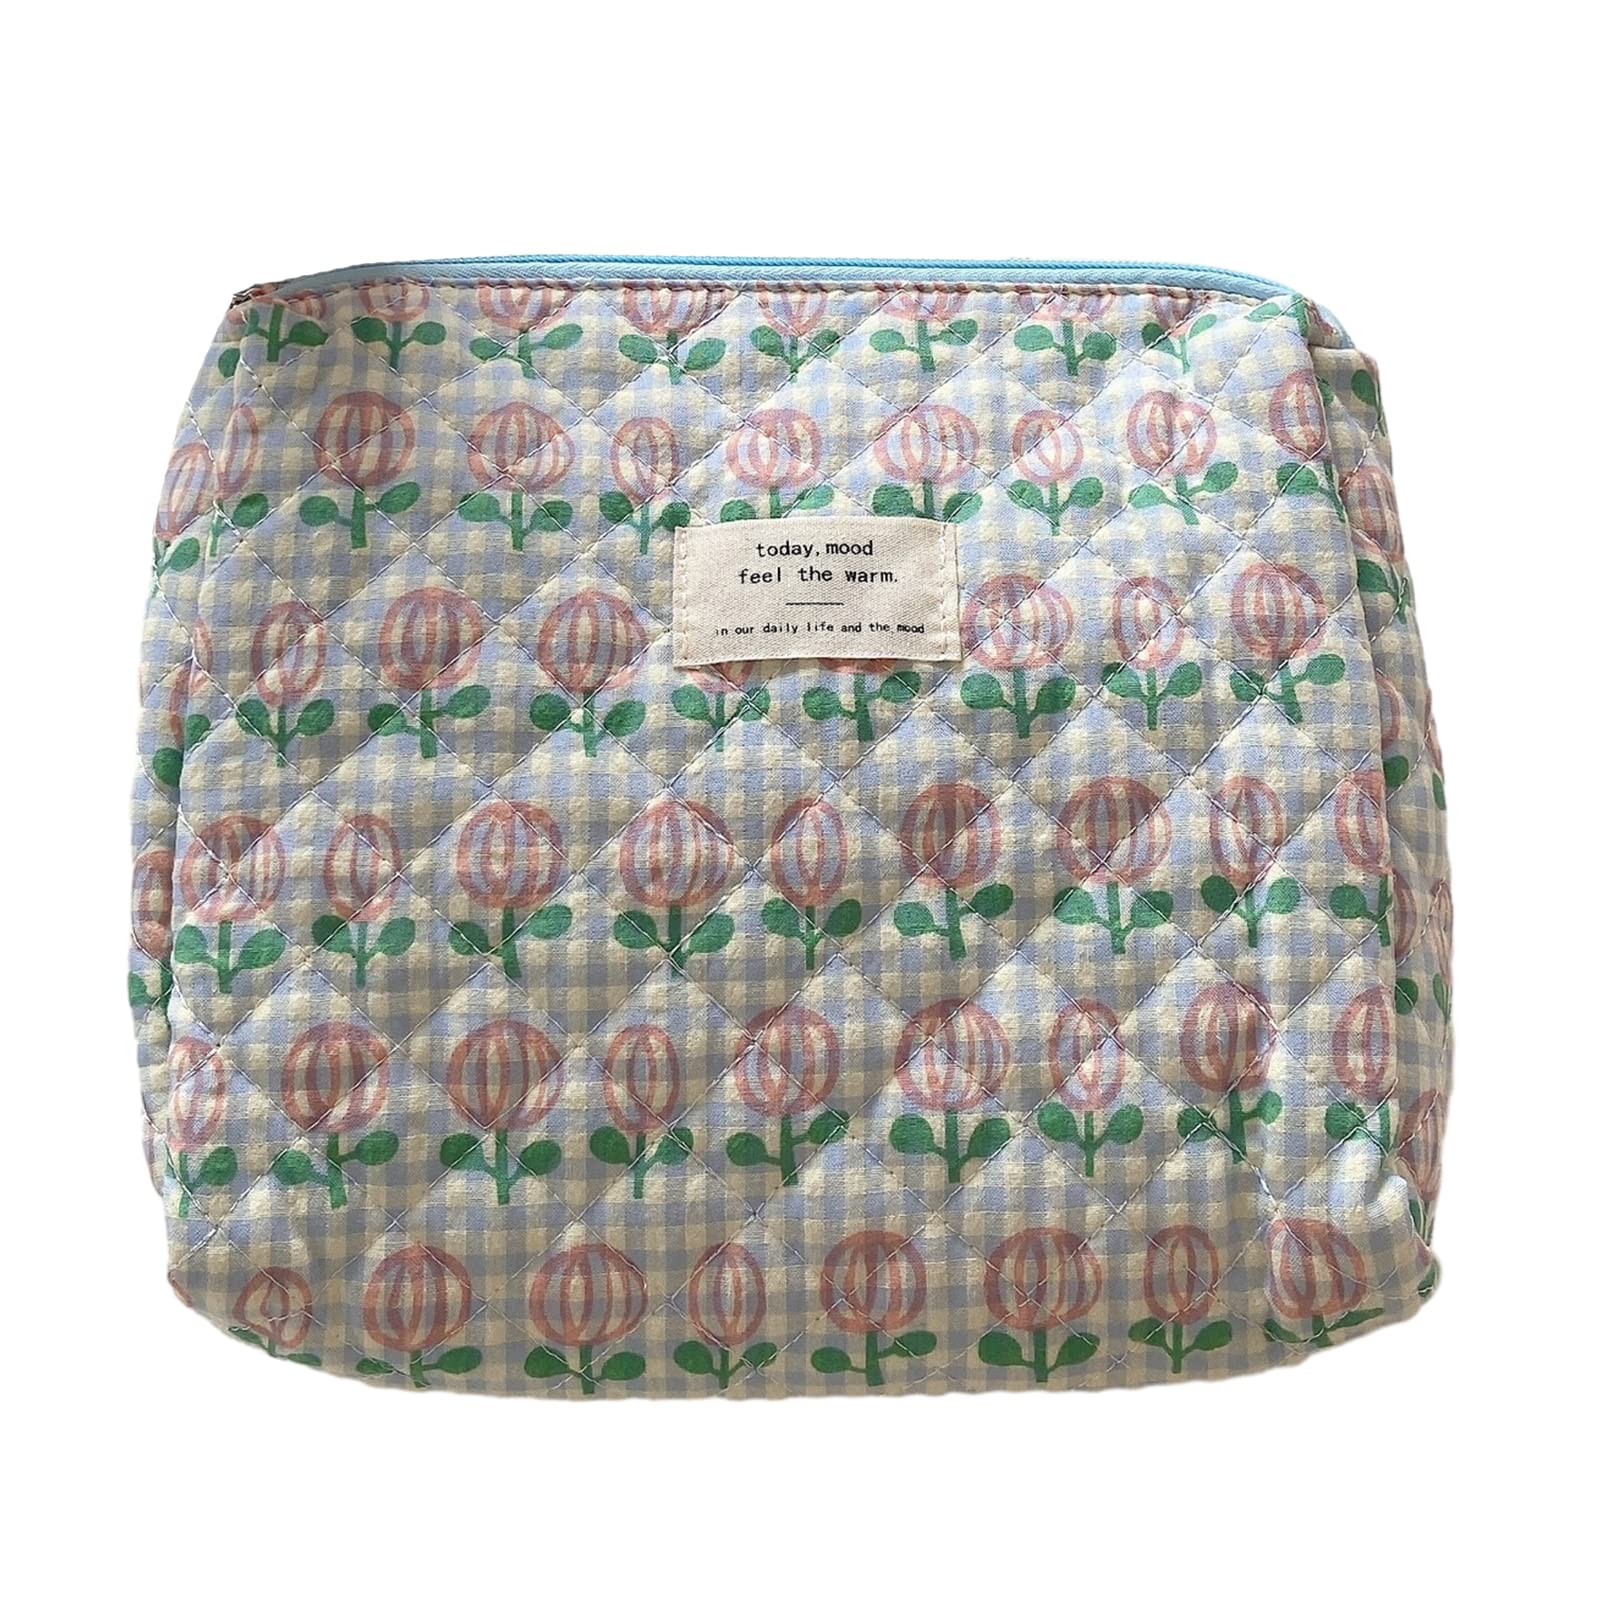 Necvior Cute Design Nappy Bag Zippewr Handbag Multi-Function Diaper Bag for Baby Care Travel Large Capacity Bag Bag Pen Holder Backpack Diaper Bag Travel Diaper Bag Multifunctional Storage Bag